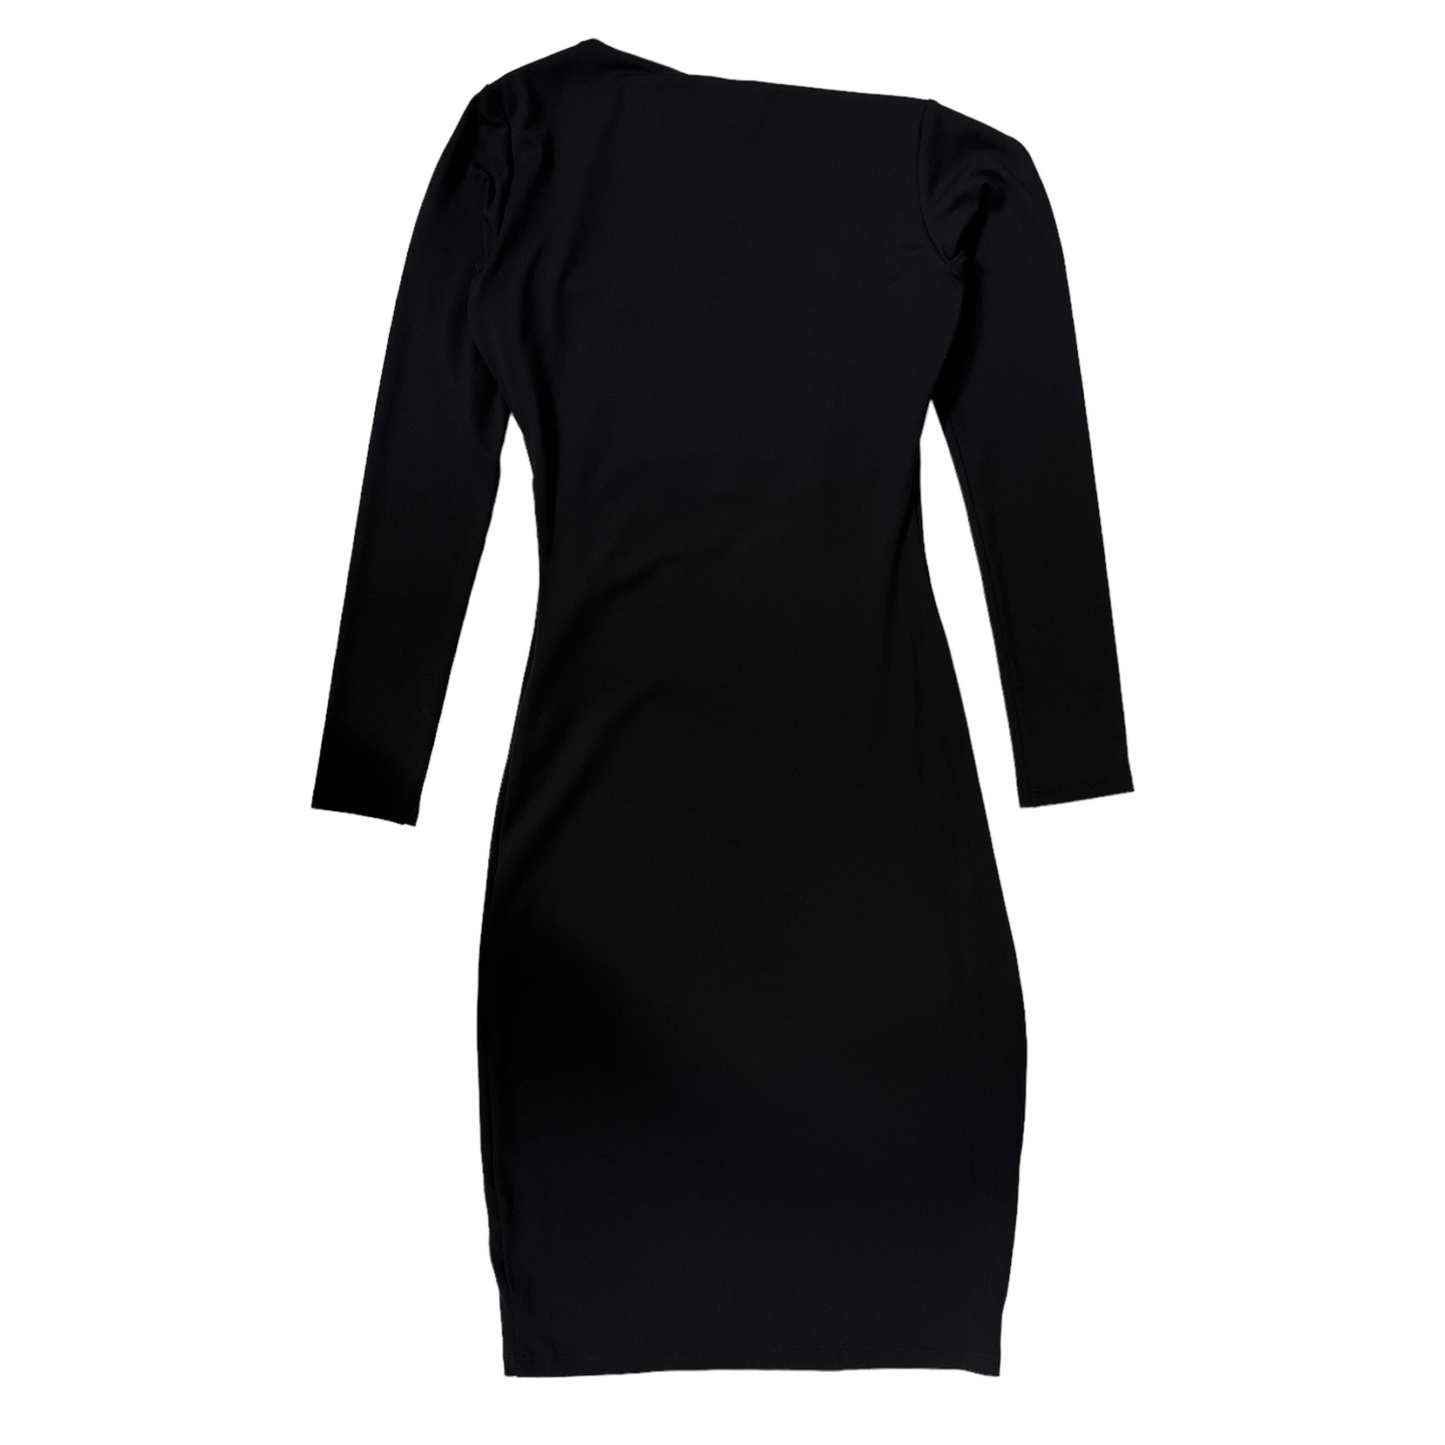 Susana Monaco Angle Cut Out Long Sleeve Dress in Black